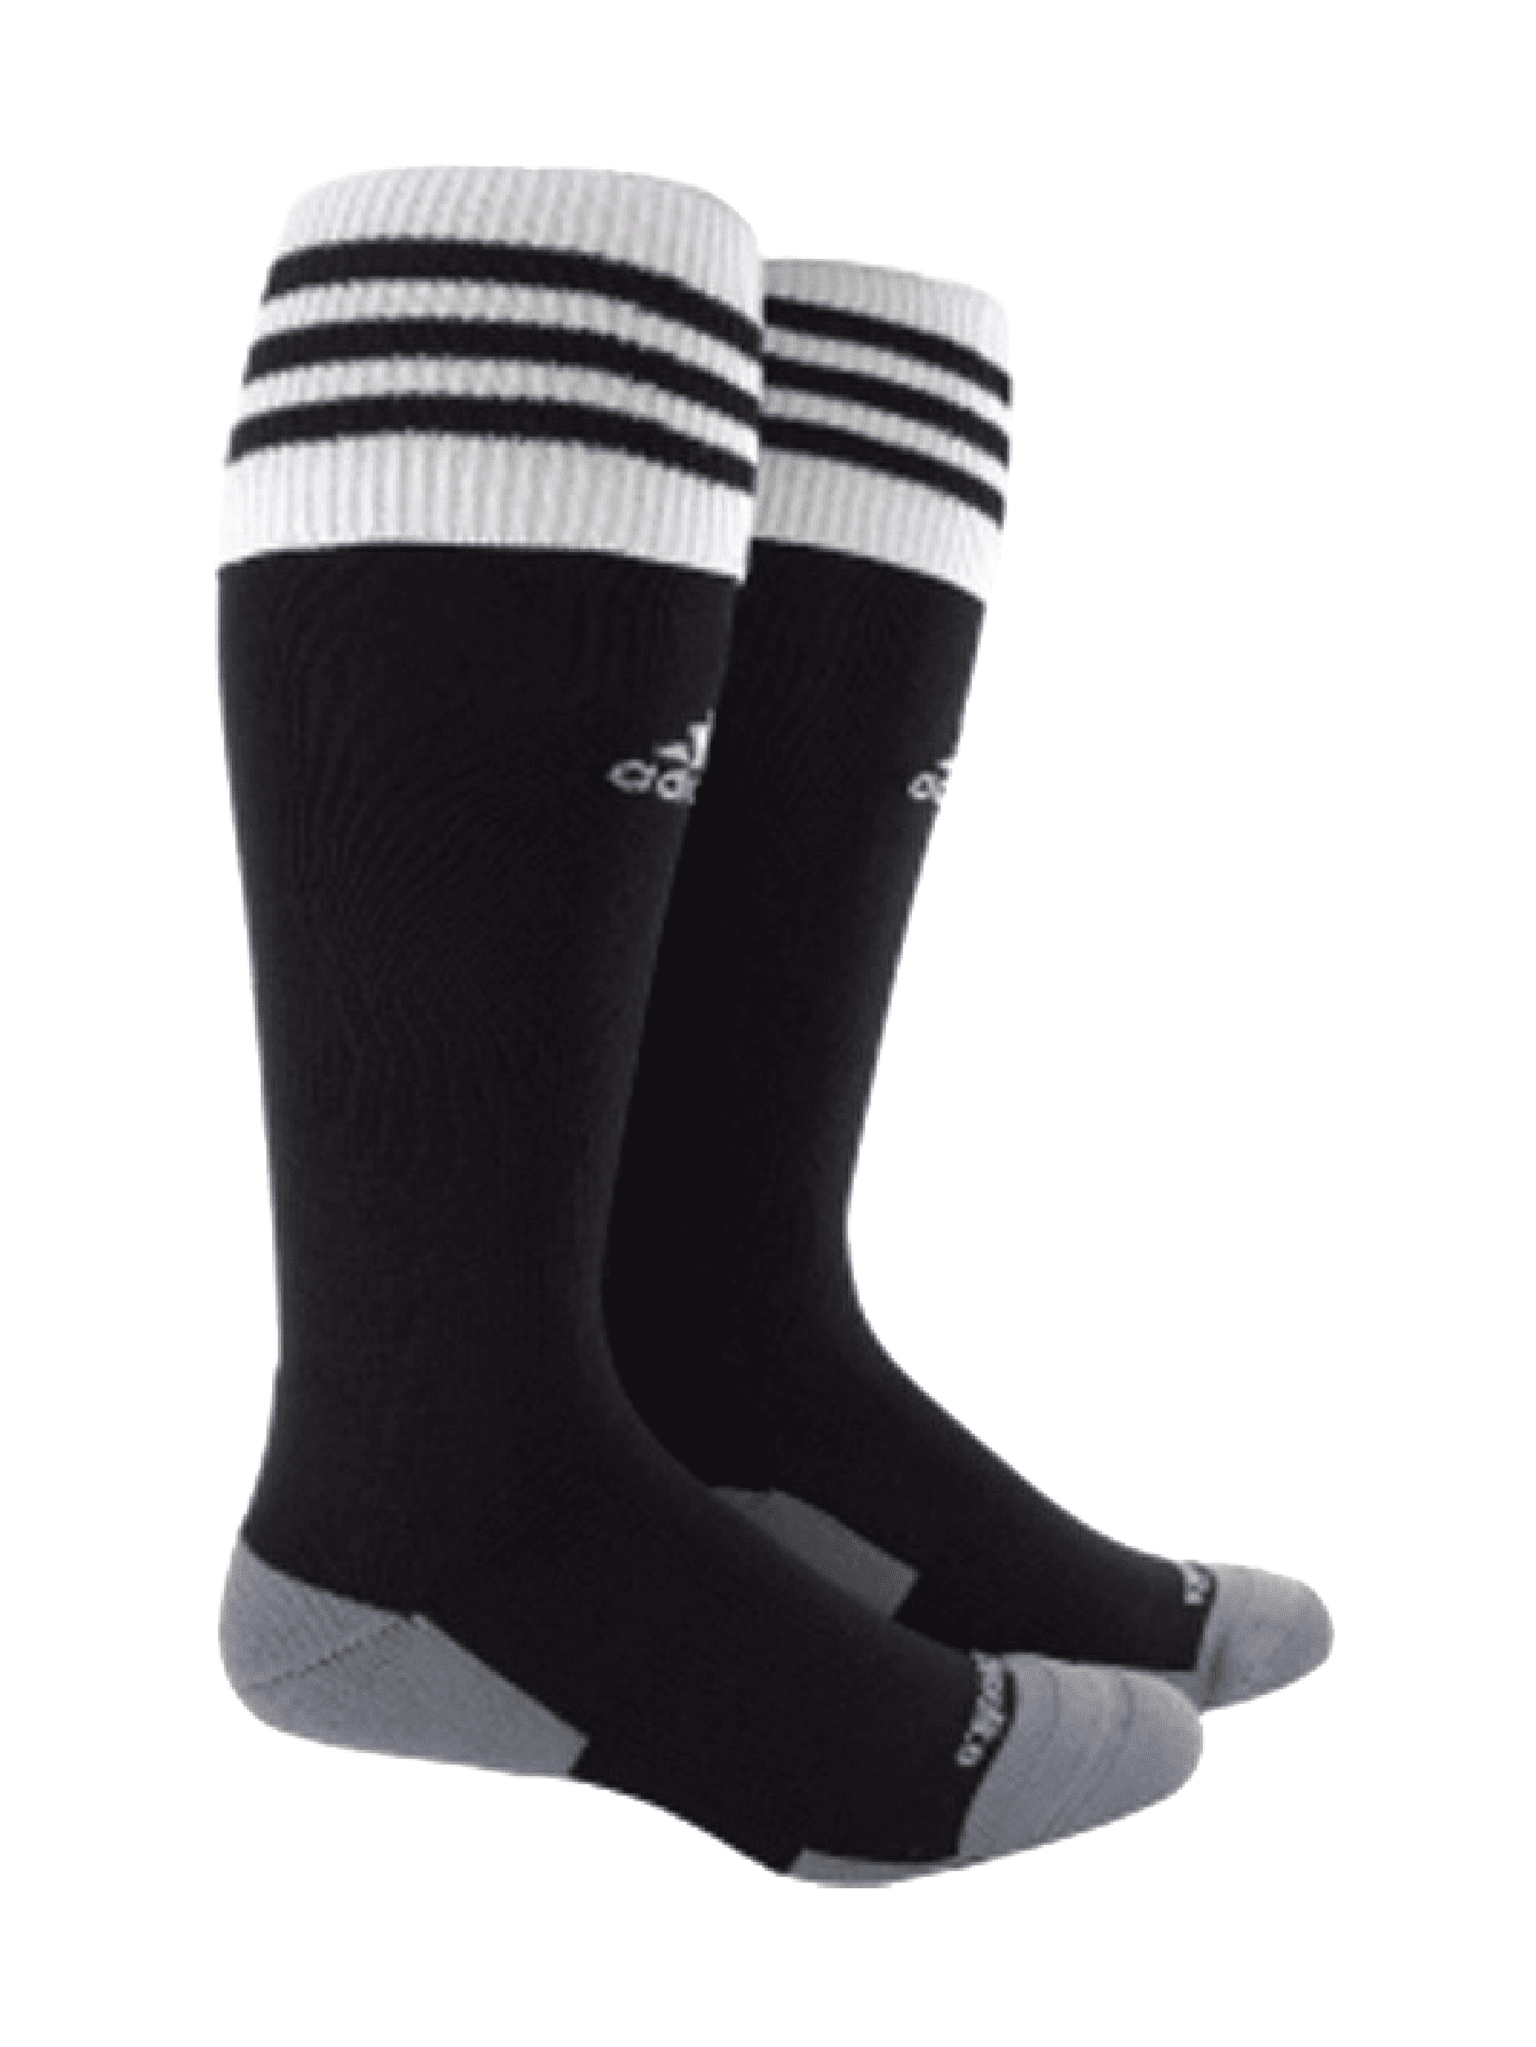 adidas Copa Zone Cushion 2.0 Sock (Black/White) - Walmart.com